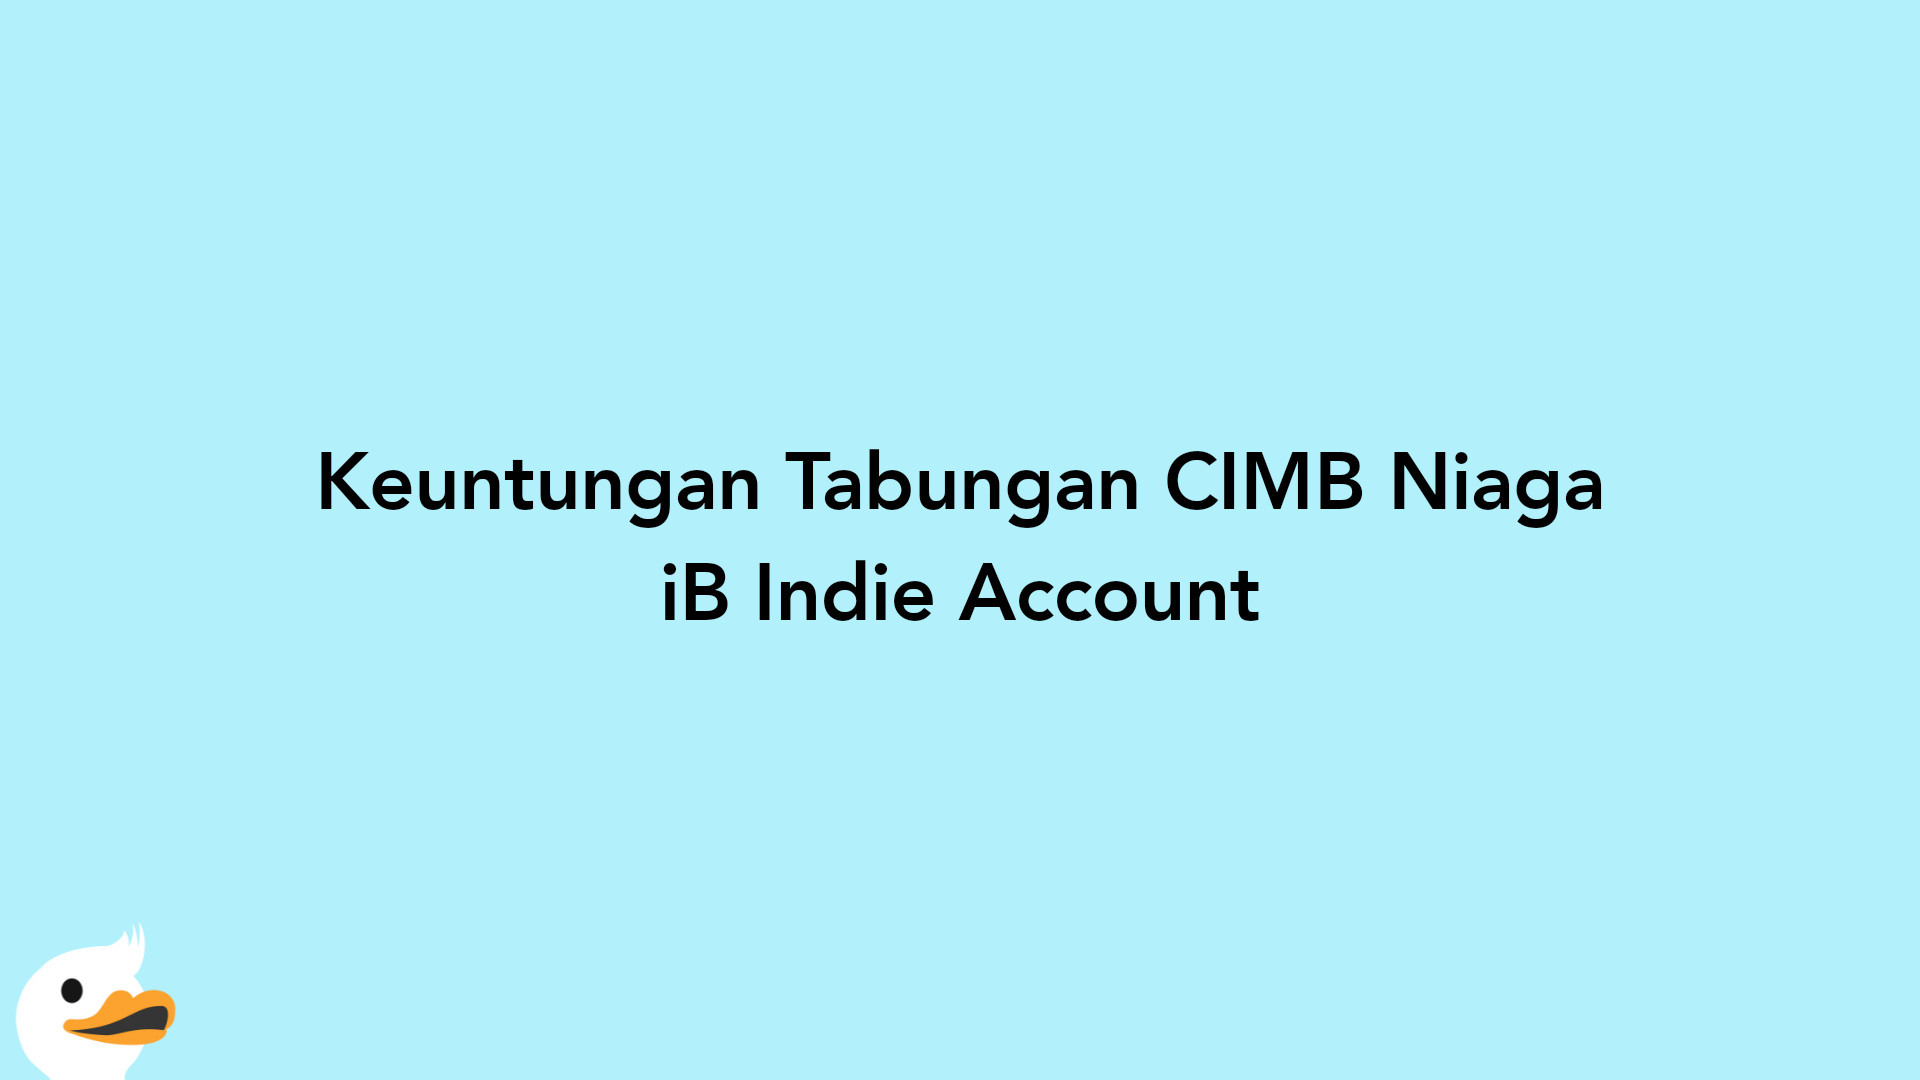 Keuntungan Tabungan CIMB Niaga iB Indie Account